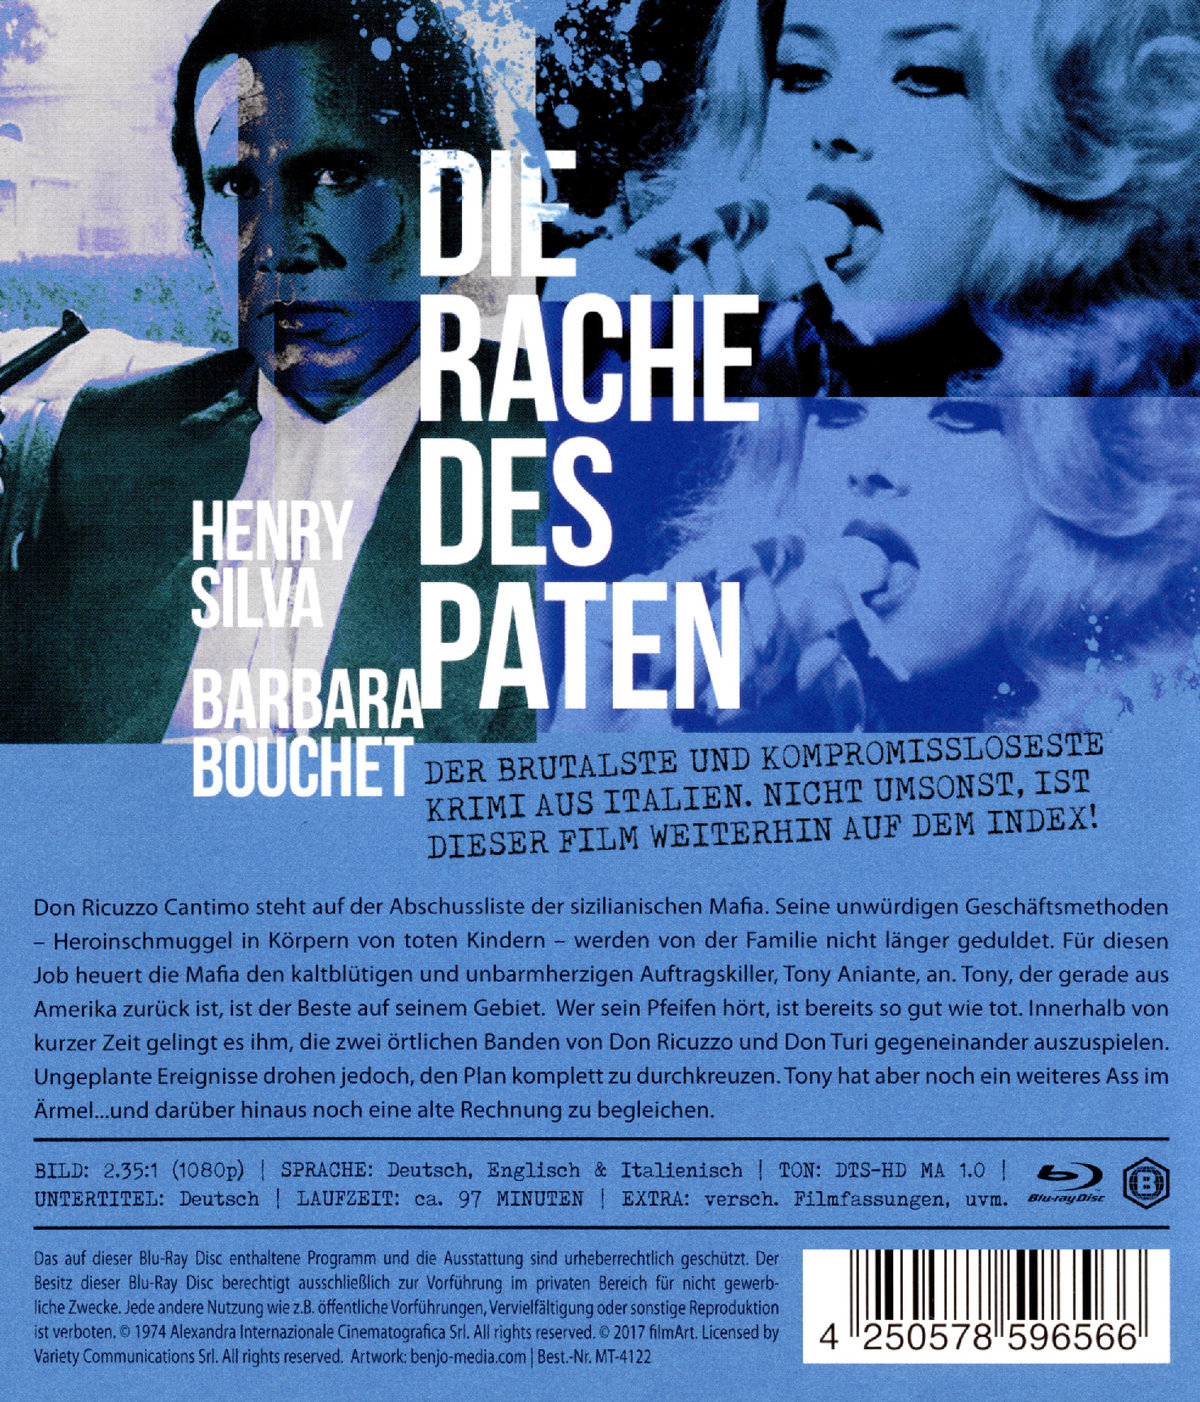 Rache des Paten, Die - Uncut Edition (blu-ray)